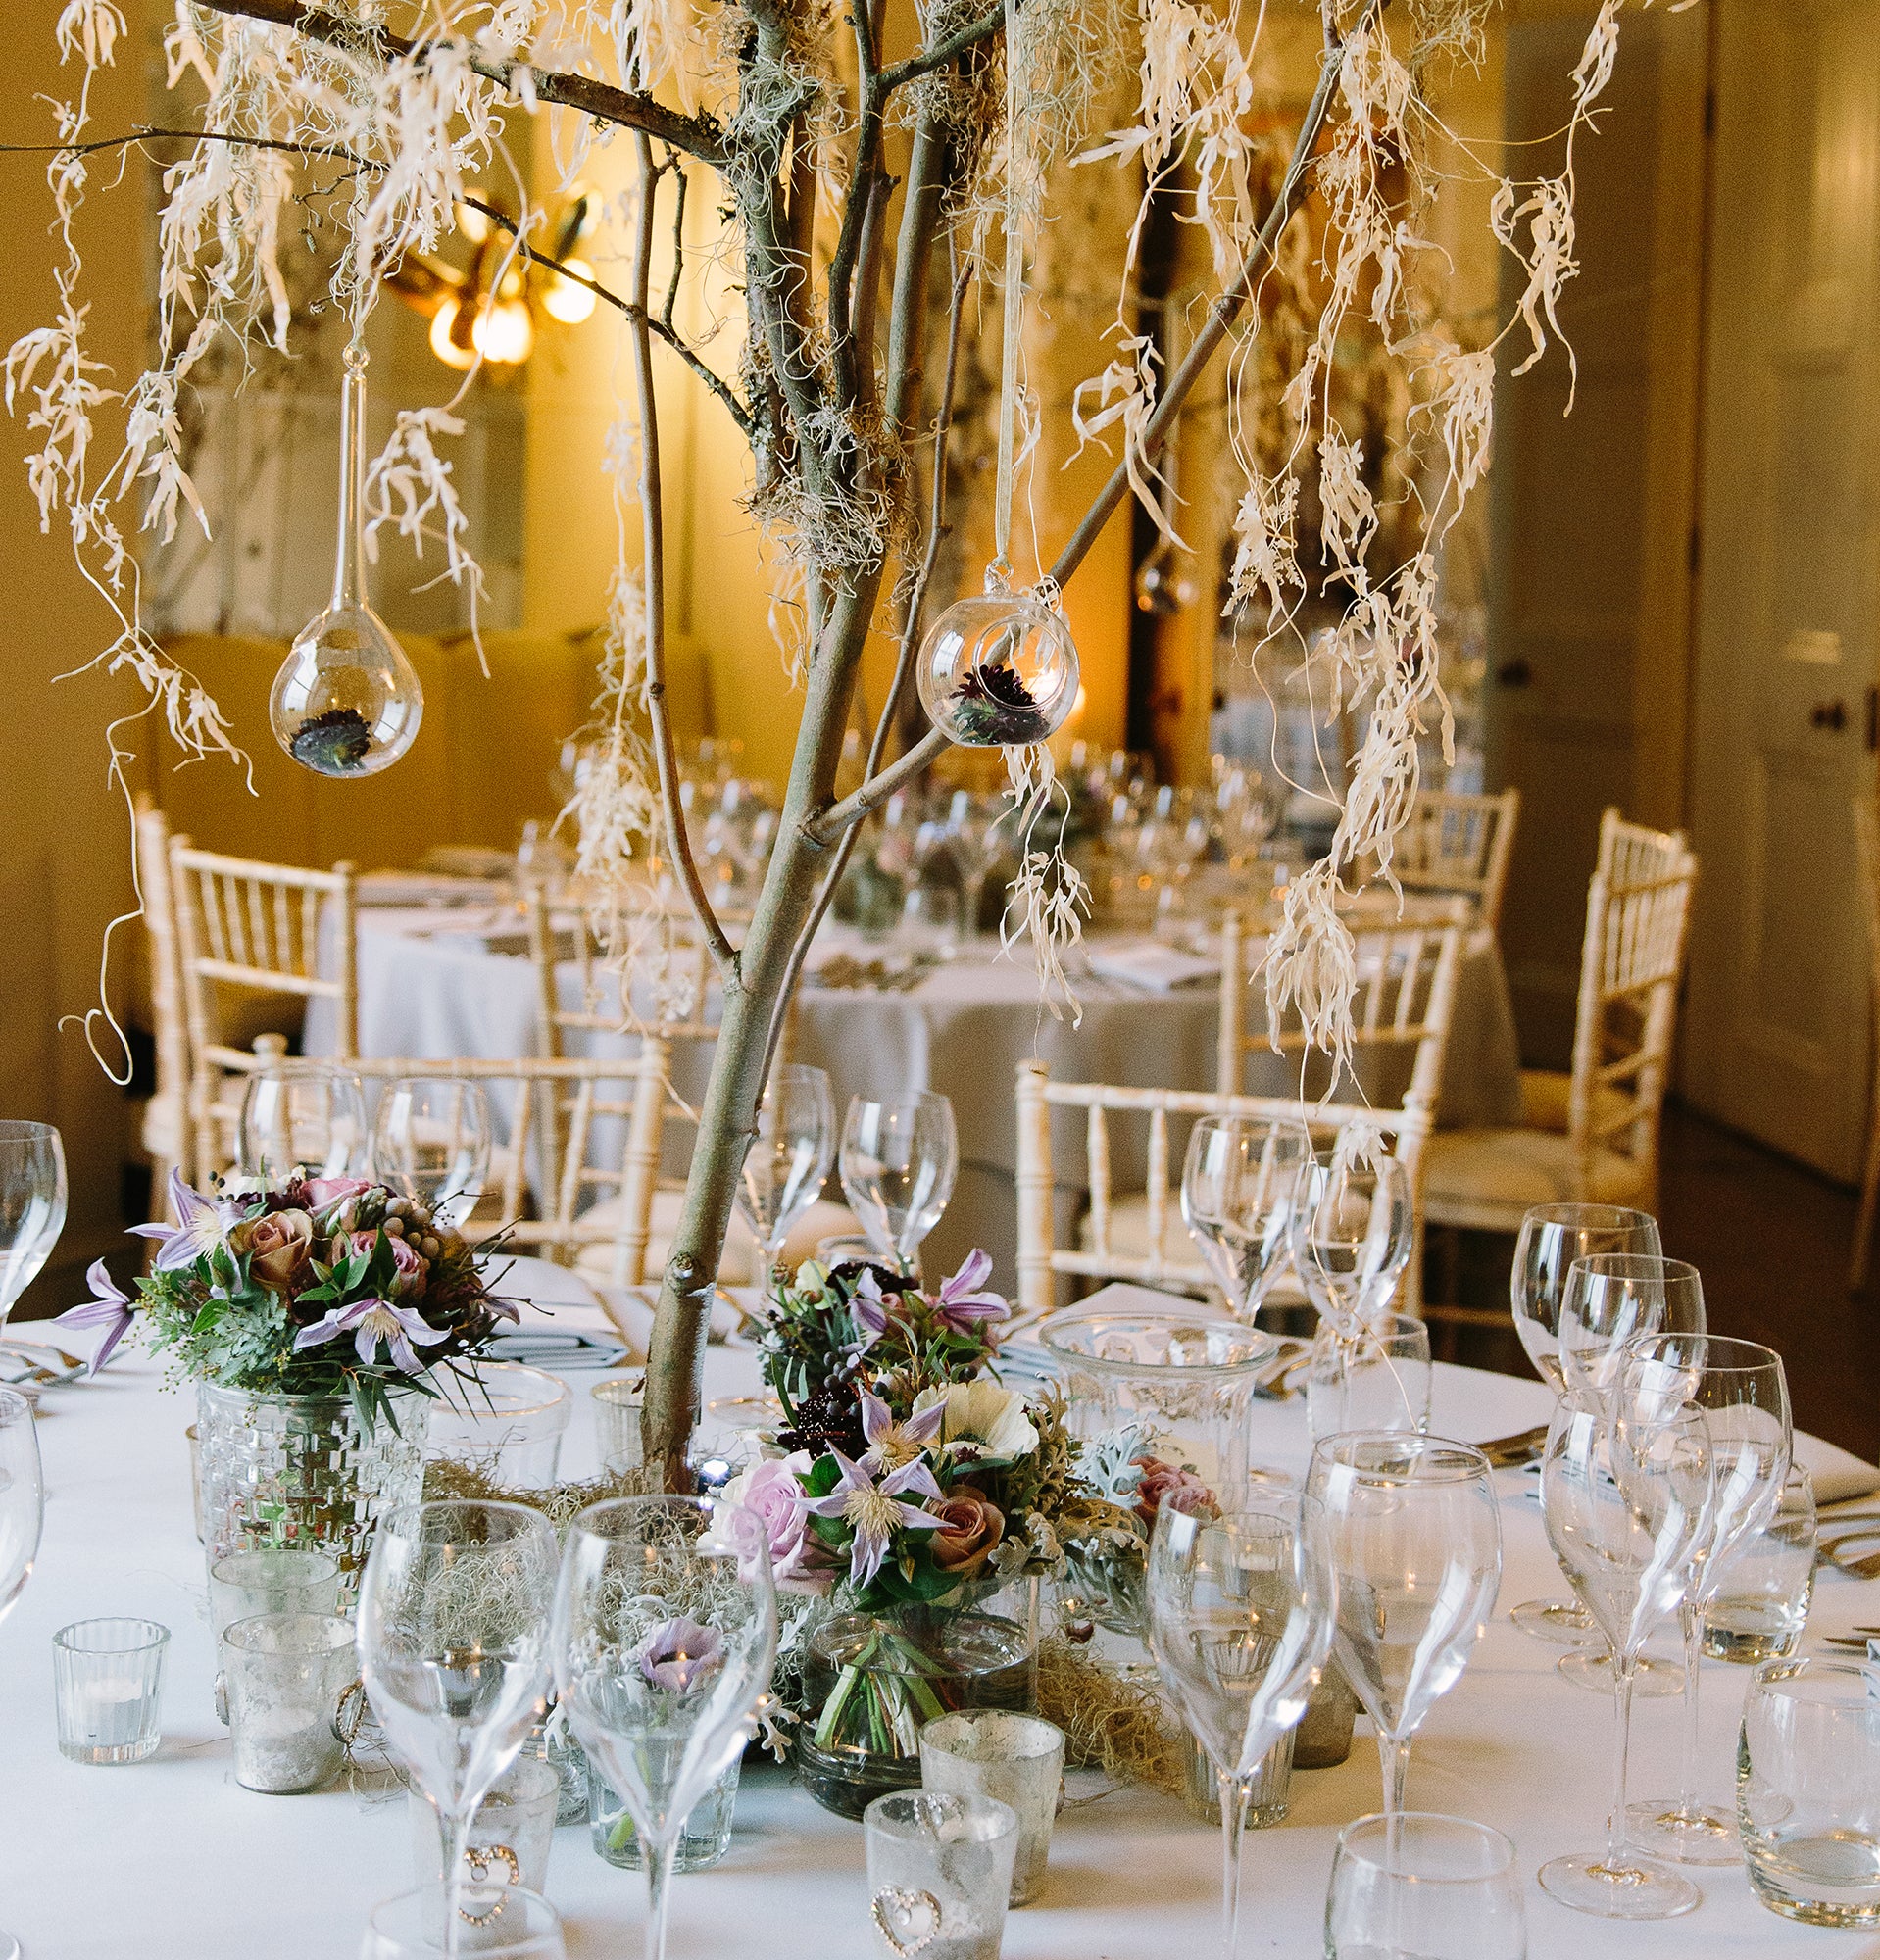 wedding dine table set up with flowers arrangement